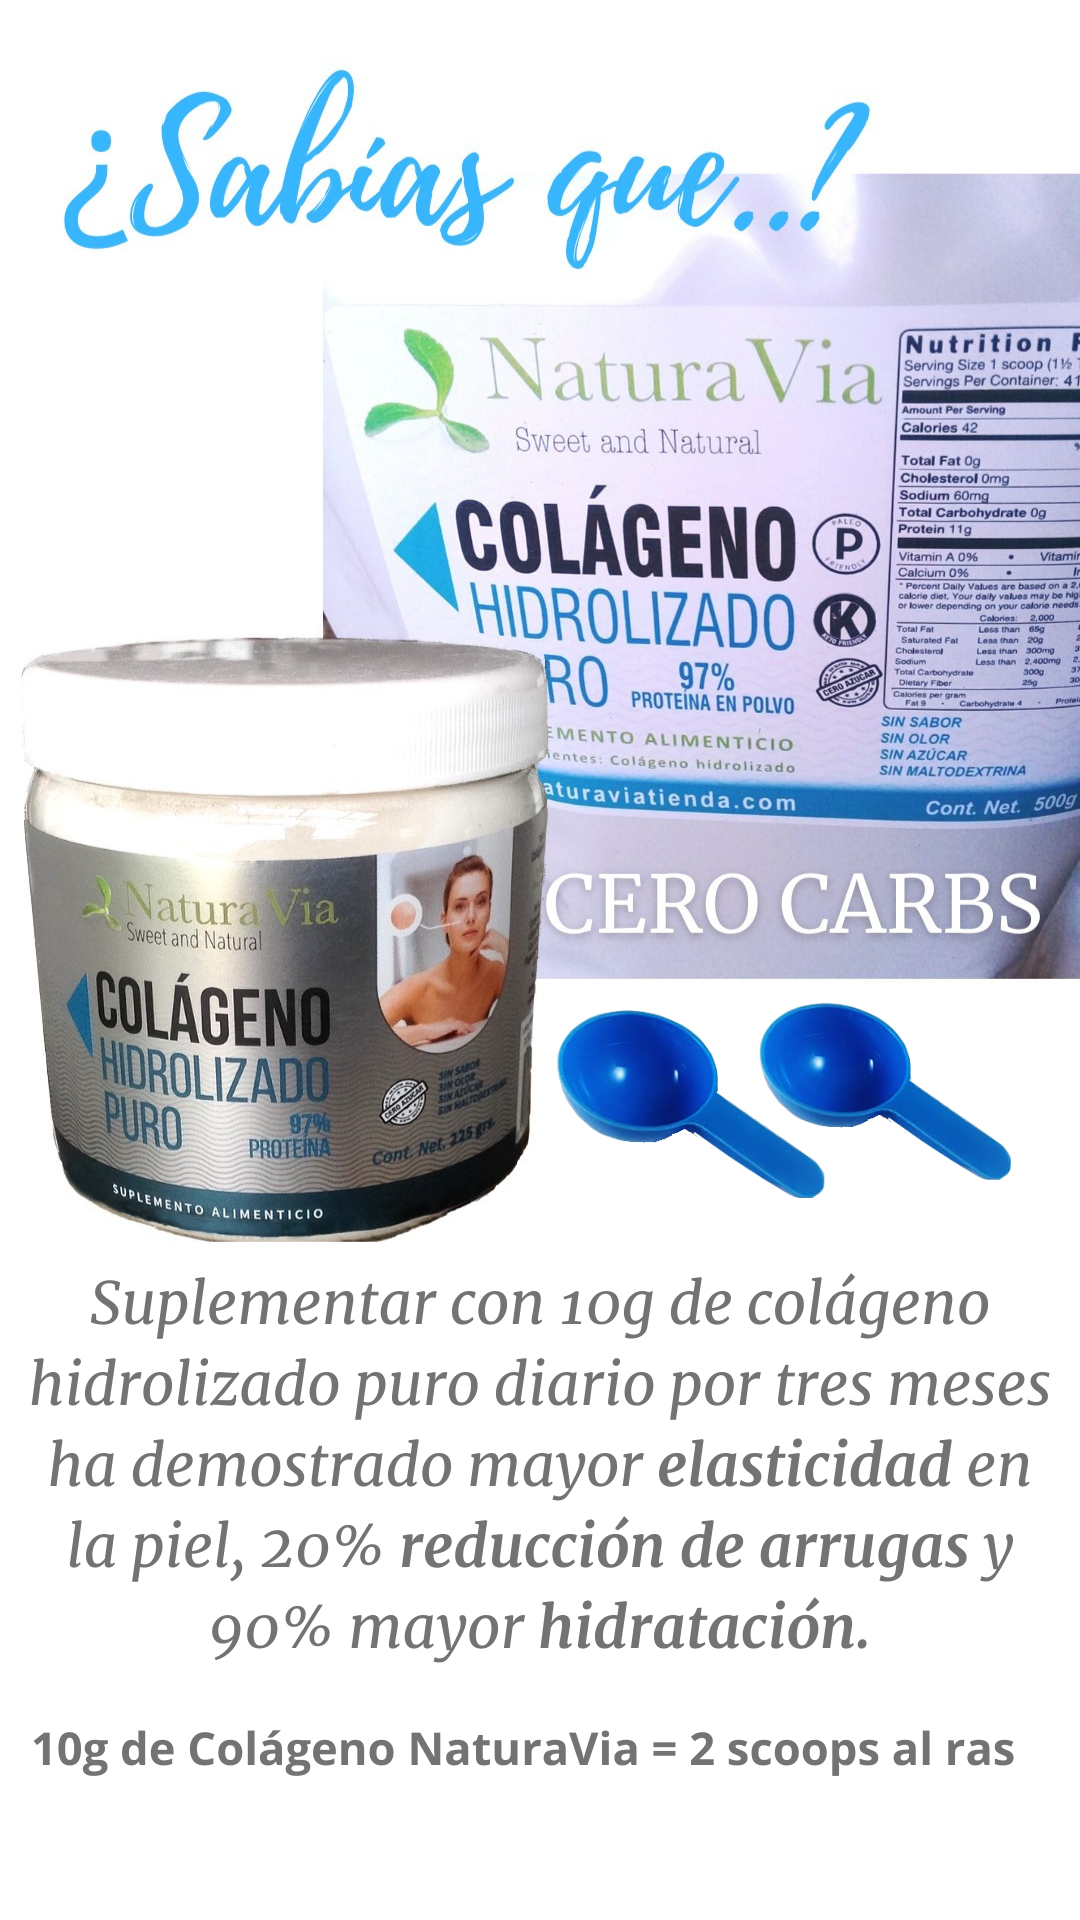 Pure Hydrolyzed Collagen - 97% Protein, Zero Carbs